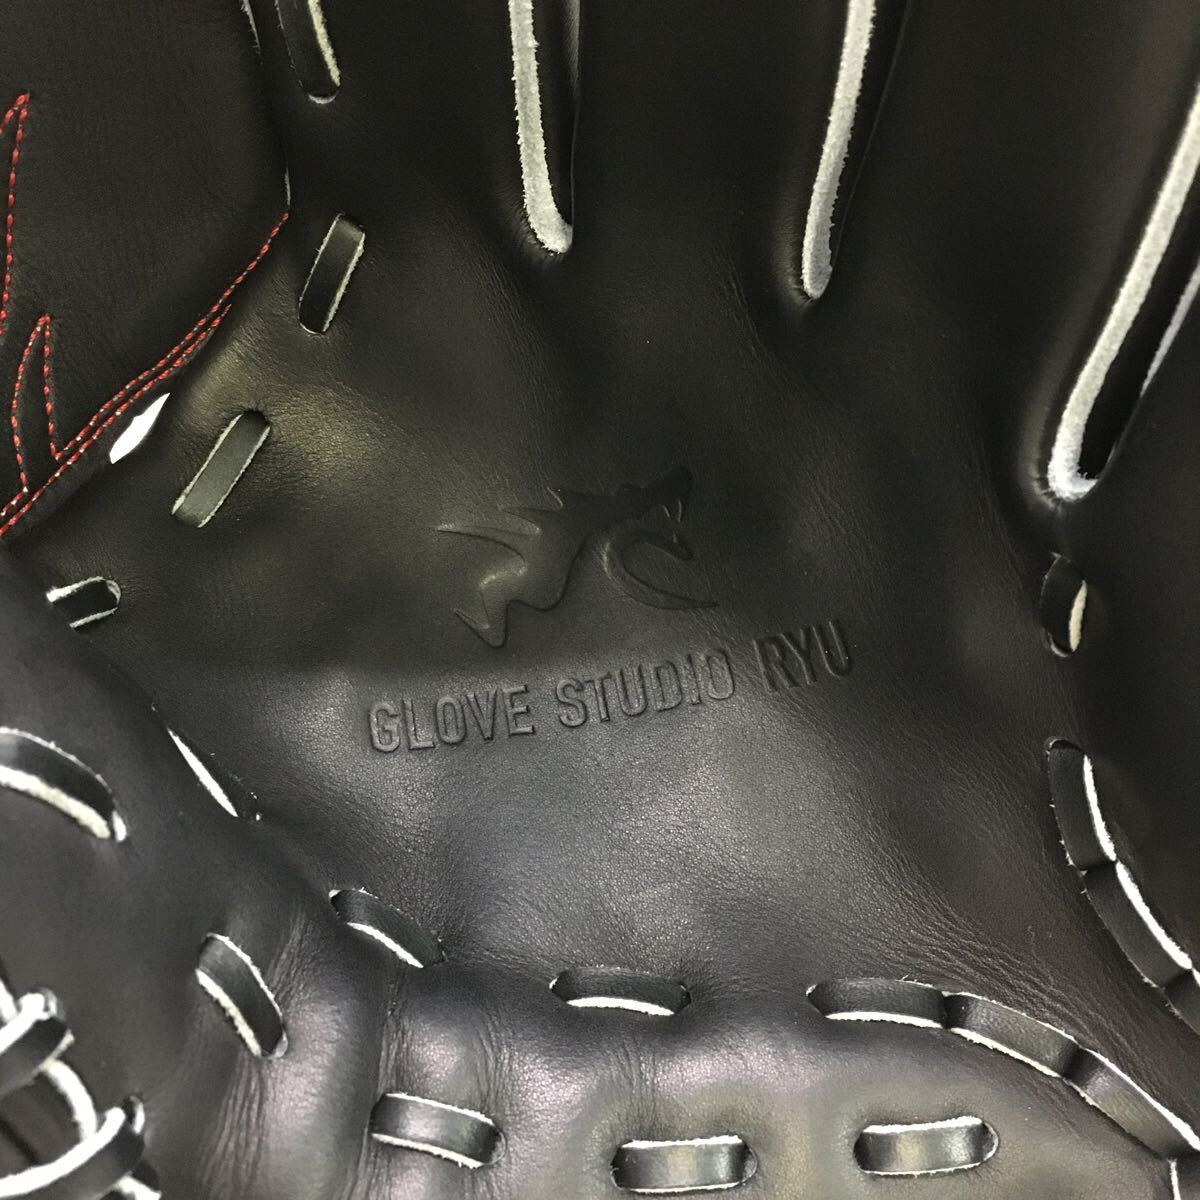 G-9866 リュウ GLOVE STUDIO RYU 硬式 投手用 グローブ グラブ 野球 中古品の画像4